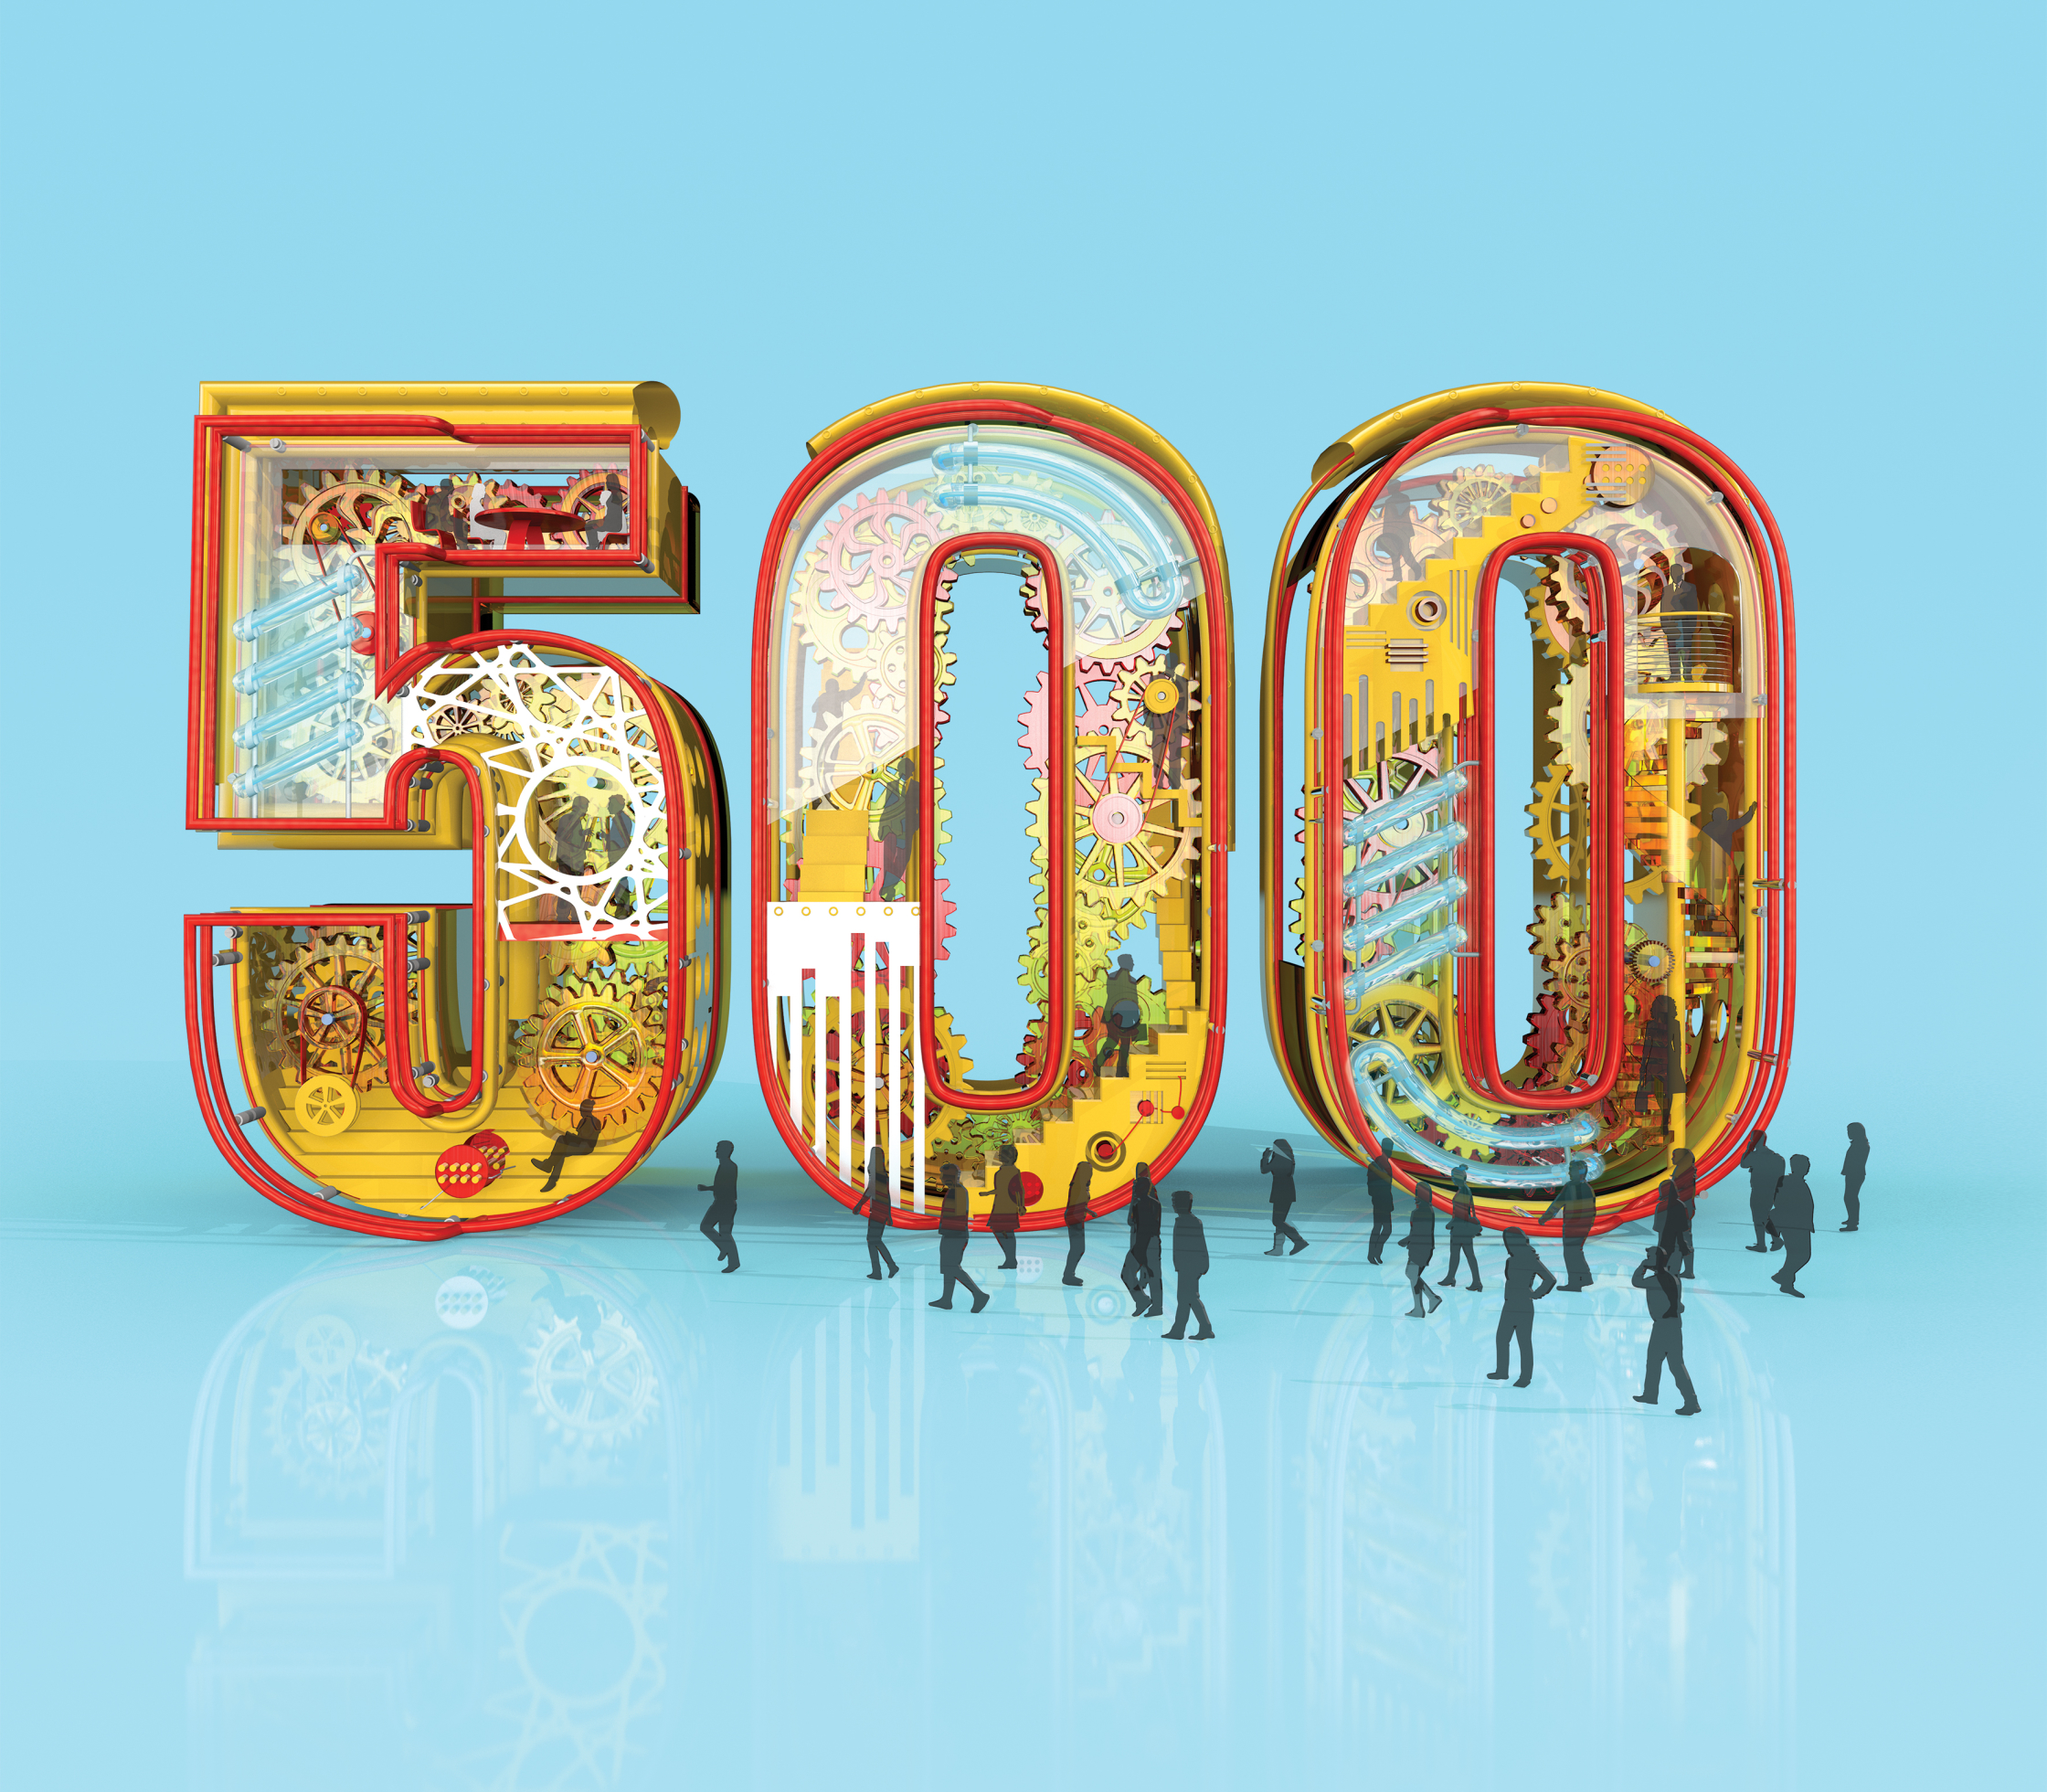 55.Top 500 banking brands.jpg